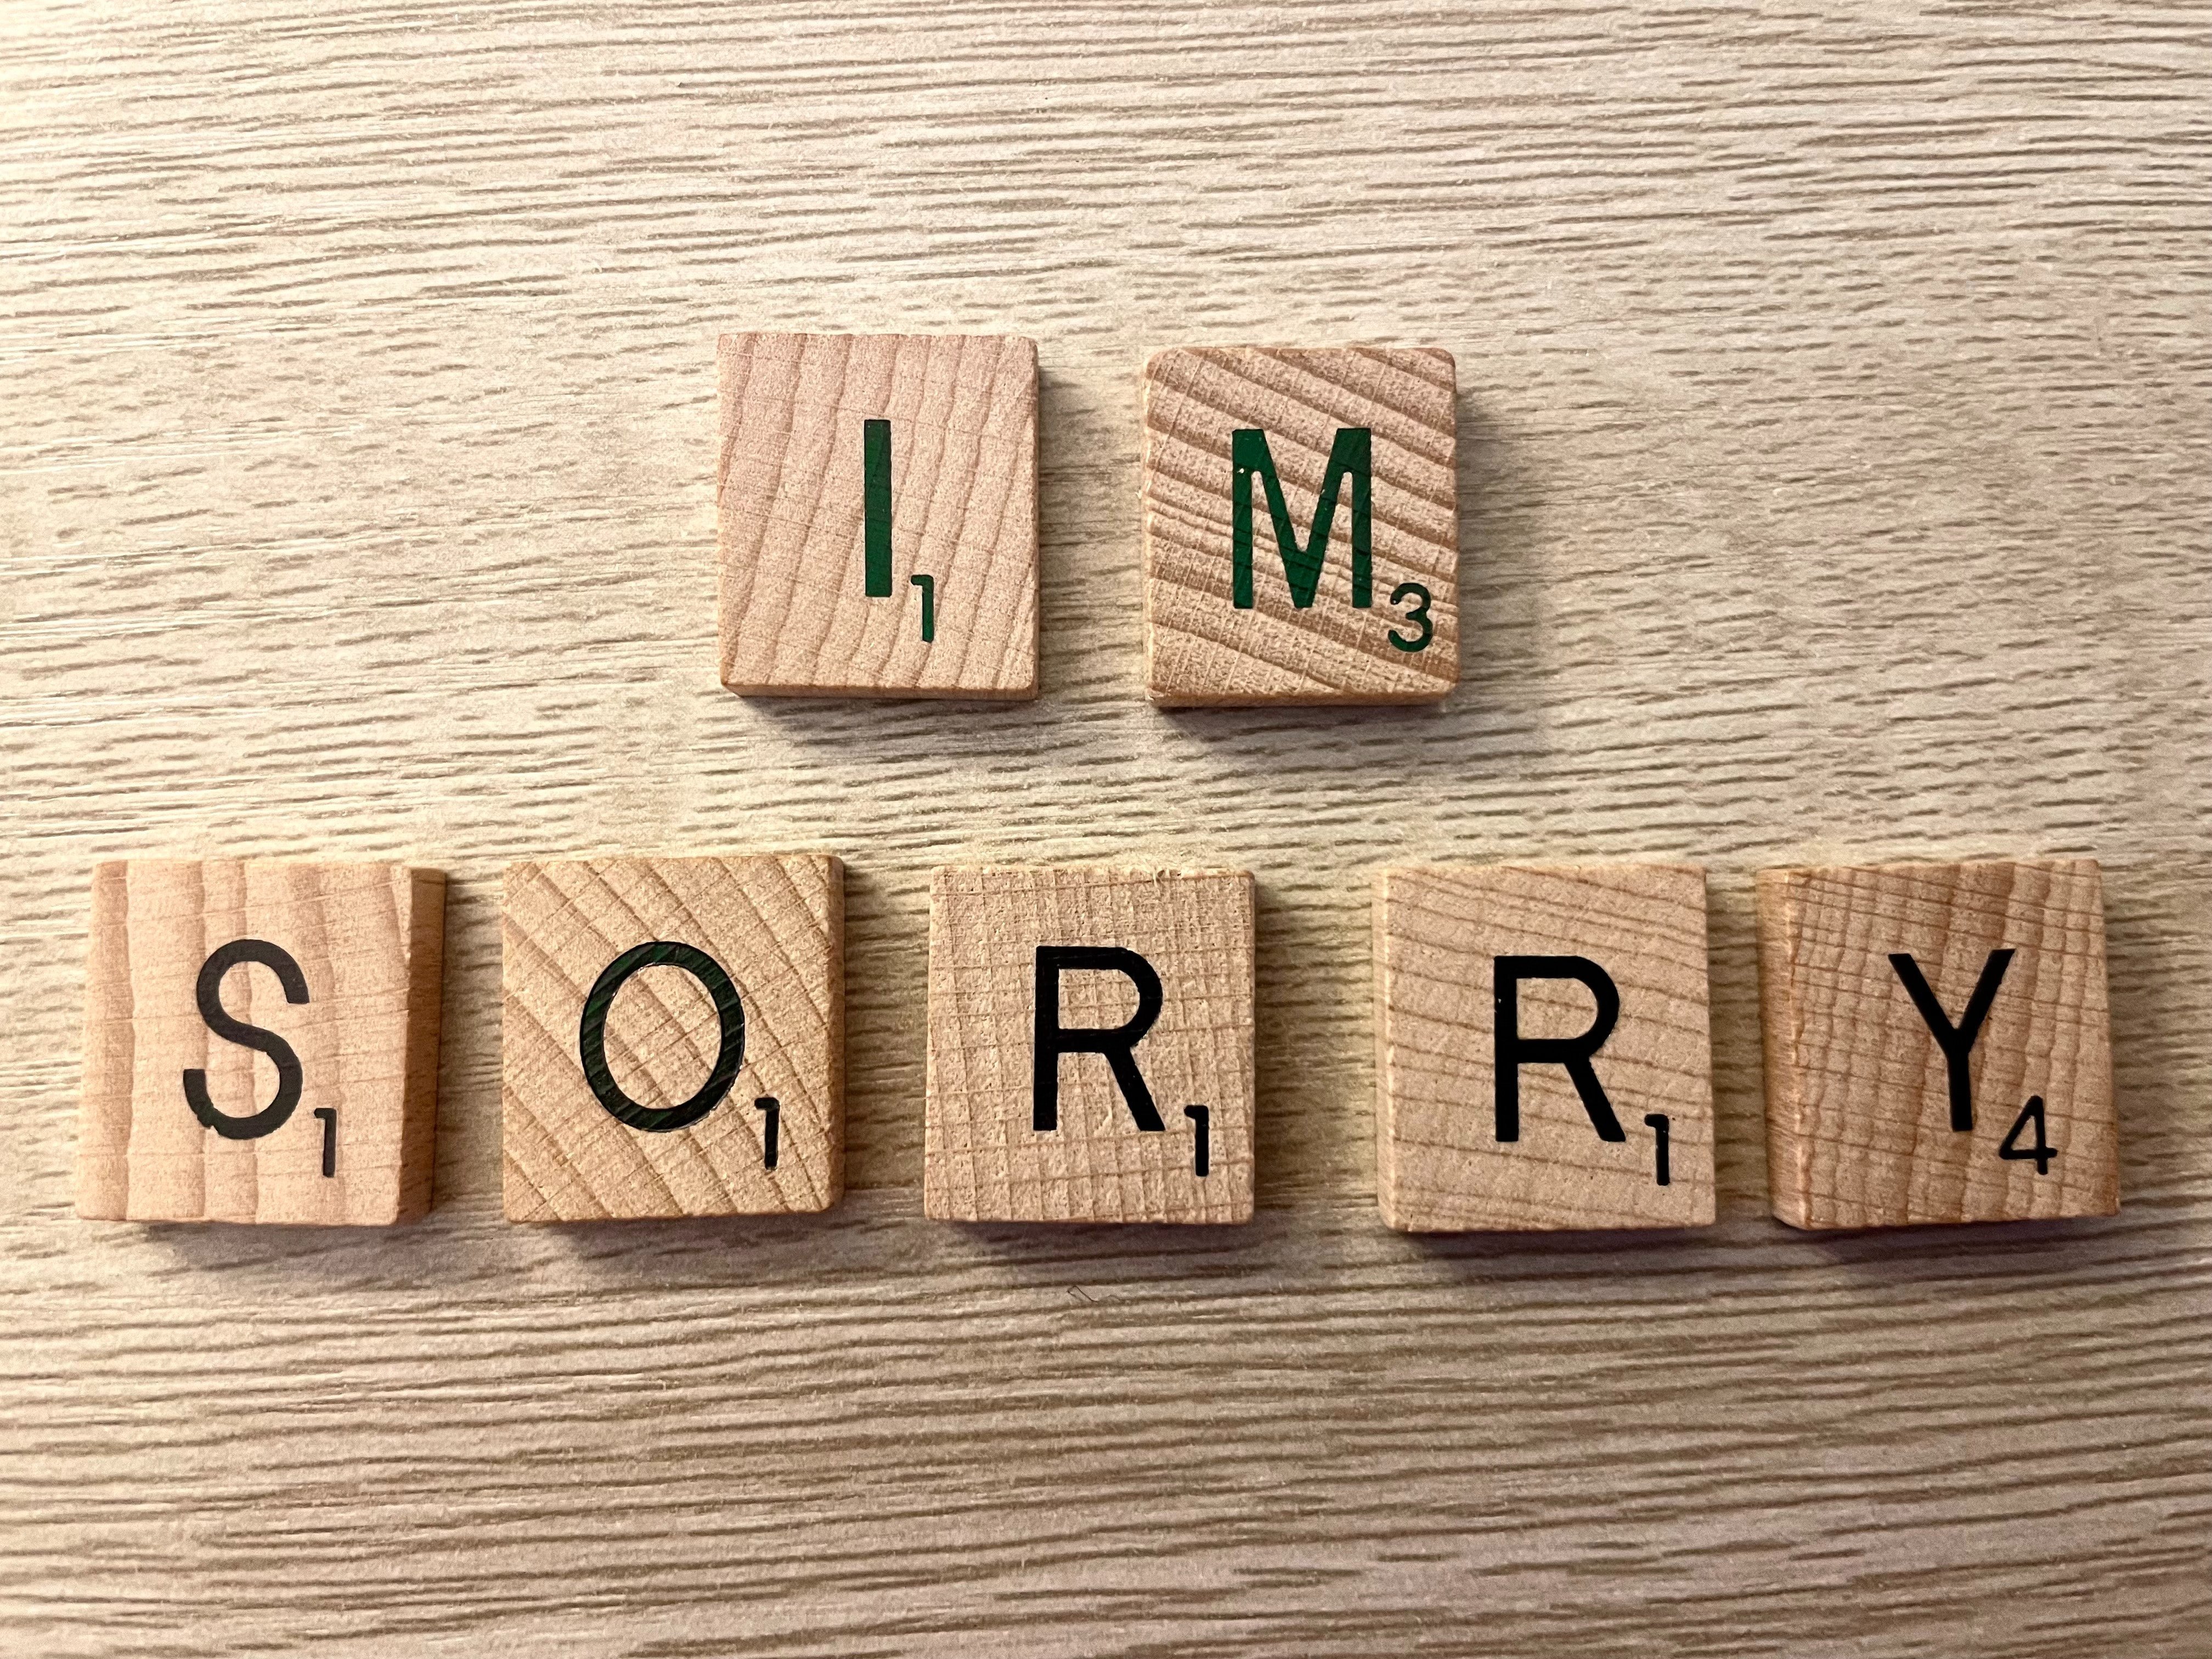 Litere de Scrabble formând cuvintele 'I'm Sorry' - comunicare și scuze.